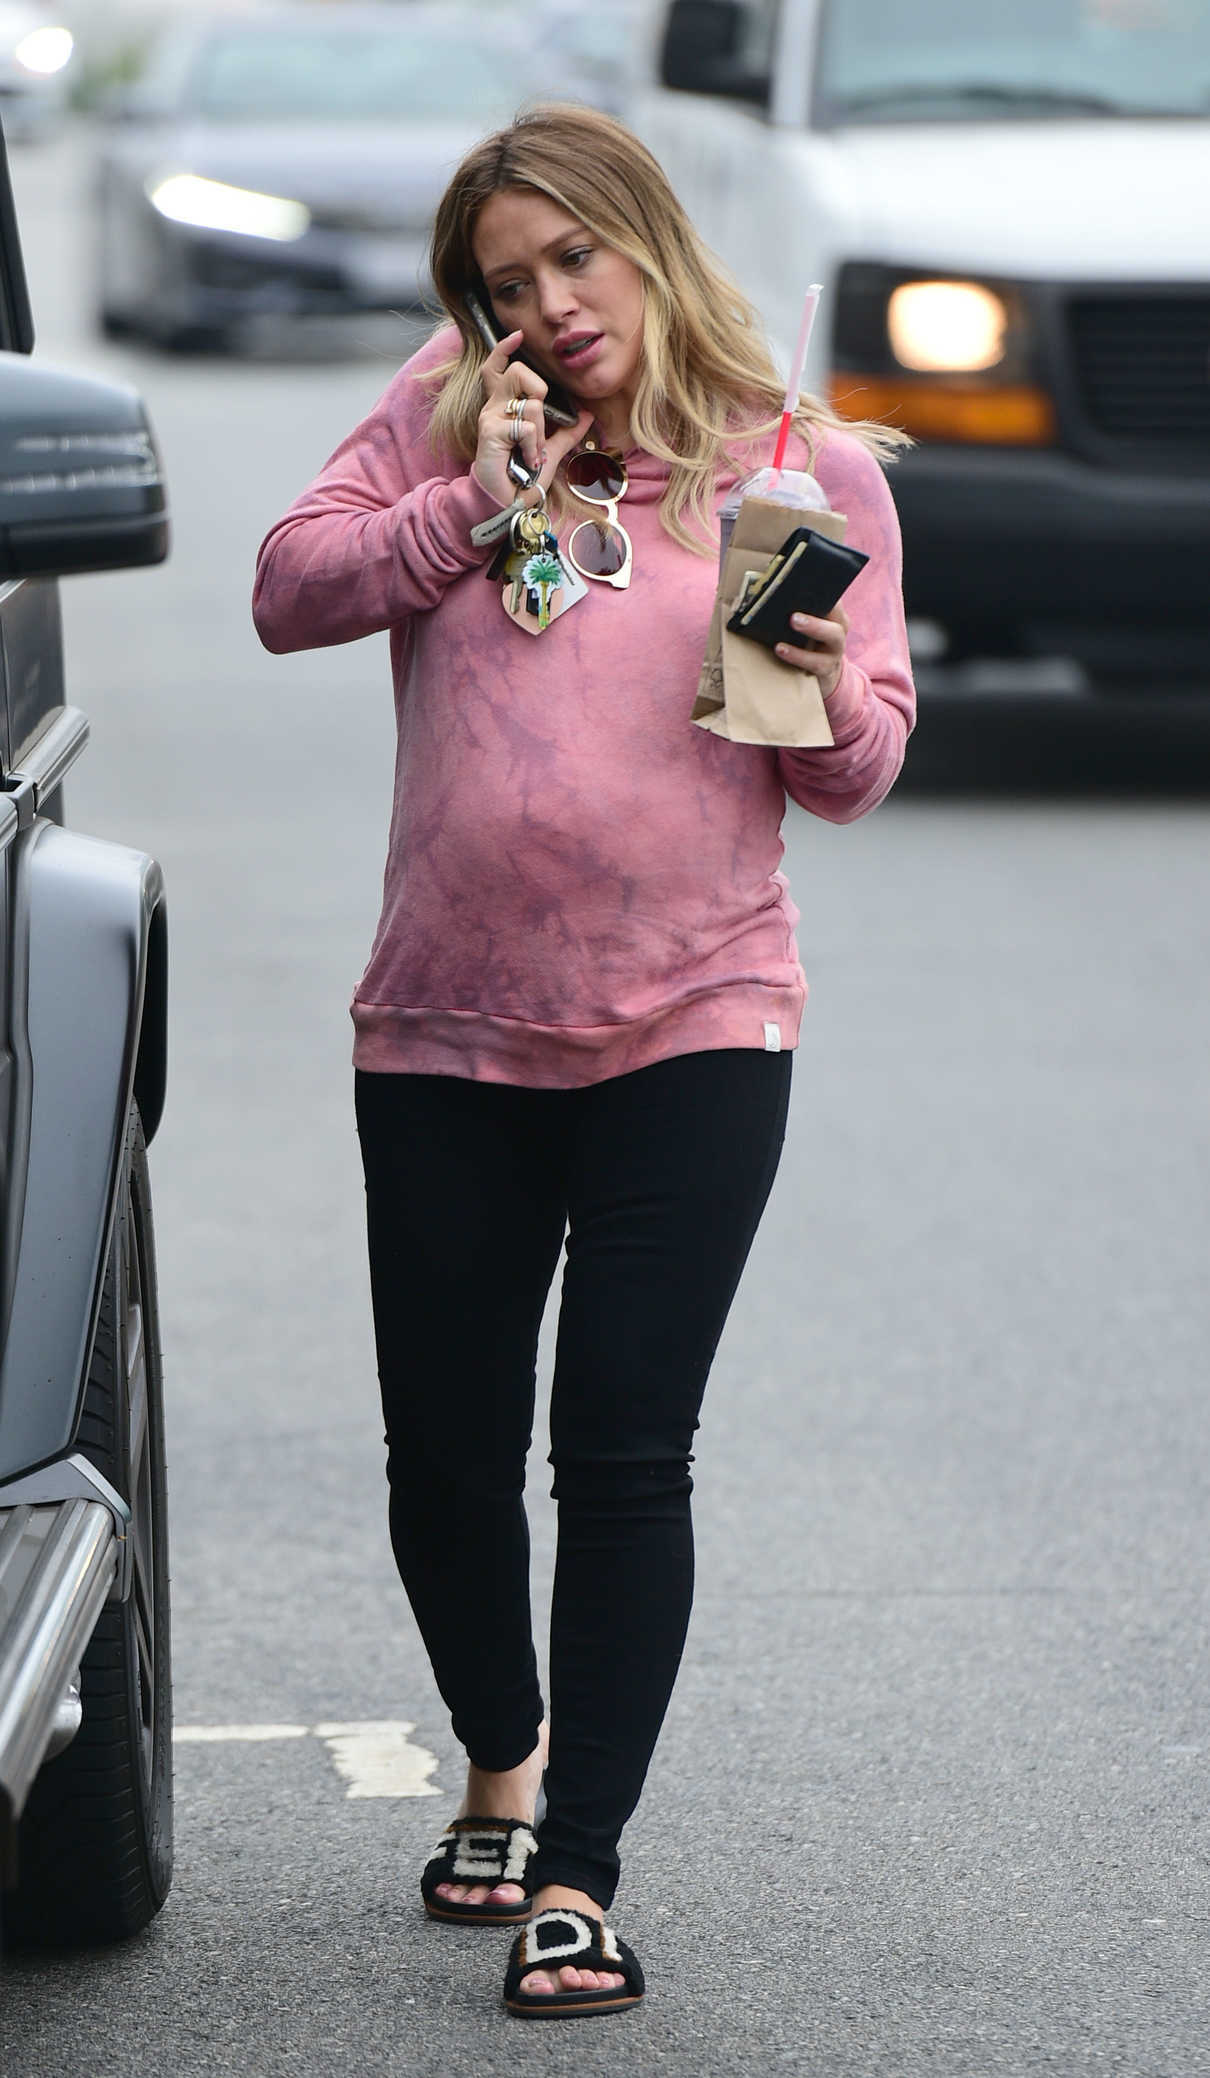 Hilary Duff in a Pink Hoody